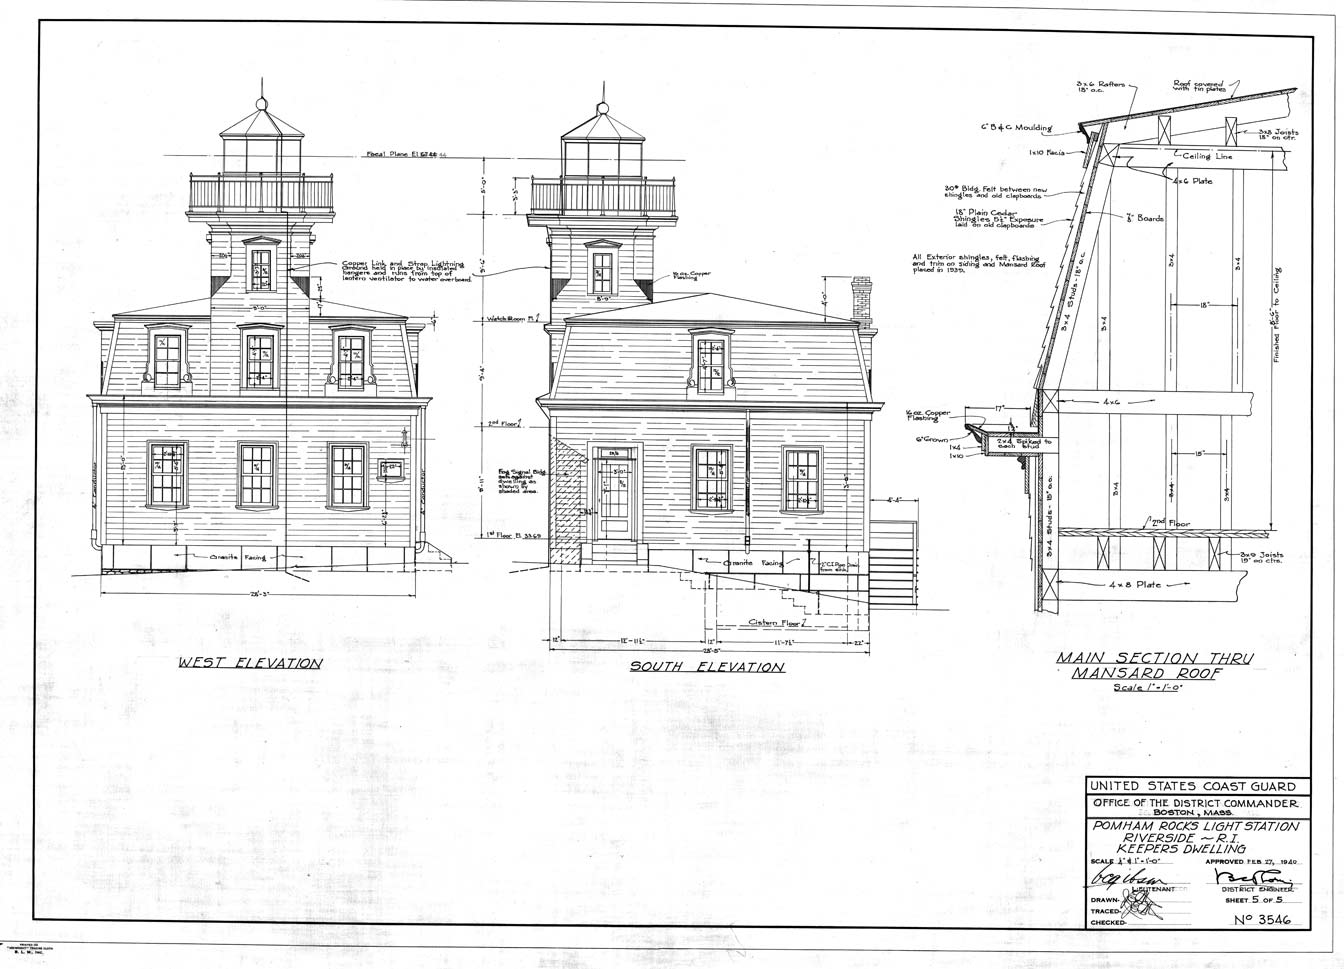   Pomham Rocks Light Station Keepers Dwelling Elevations - Sheet 4 of 5 - 1940